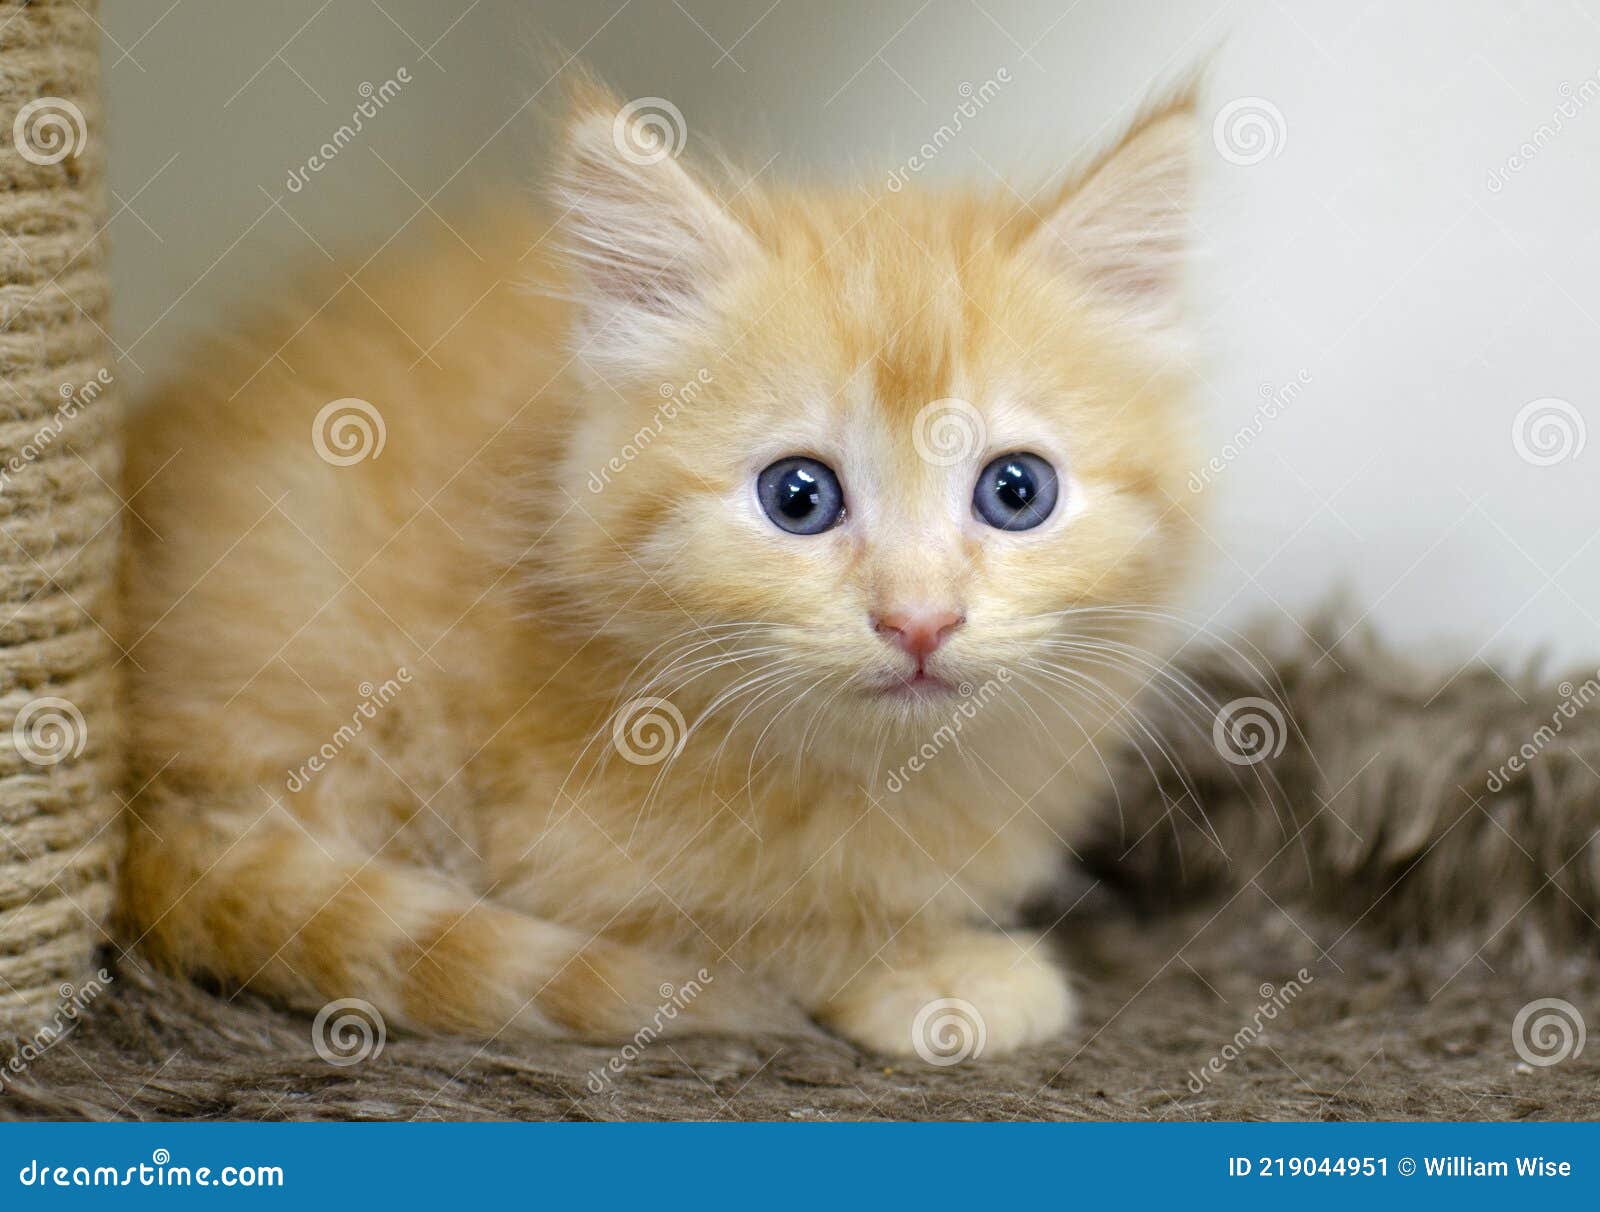 Fluffy Orange Long Hair Kitten With Blue Eyes Stock Image Image Of Website Post